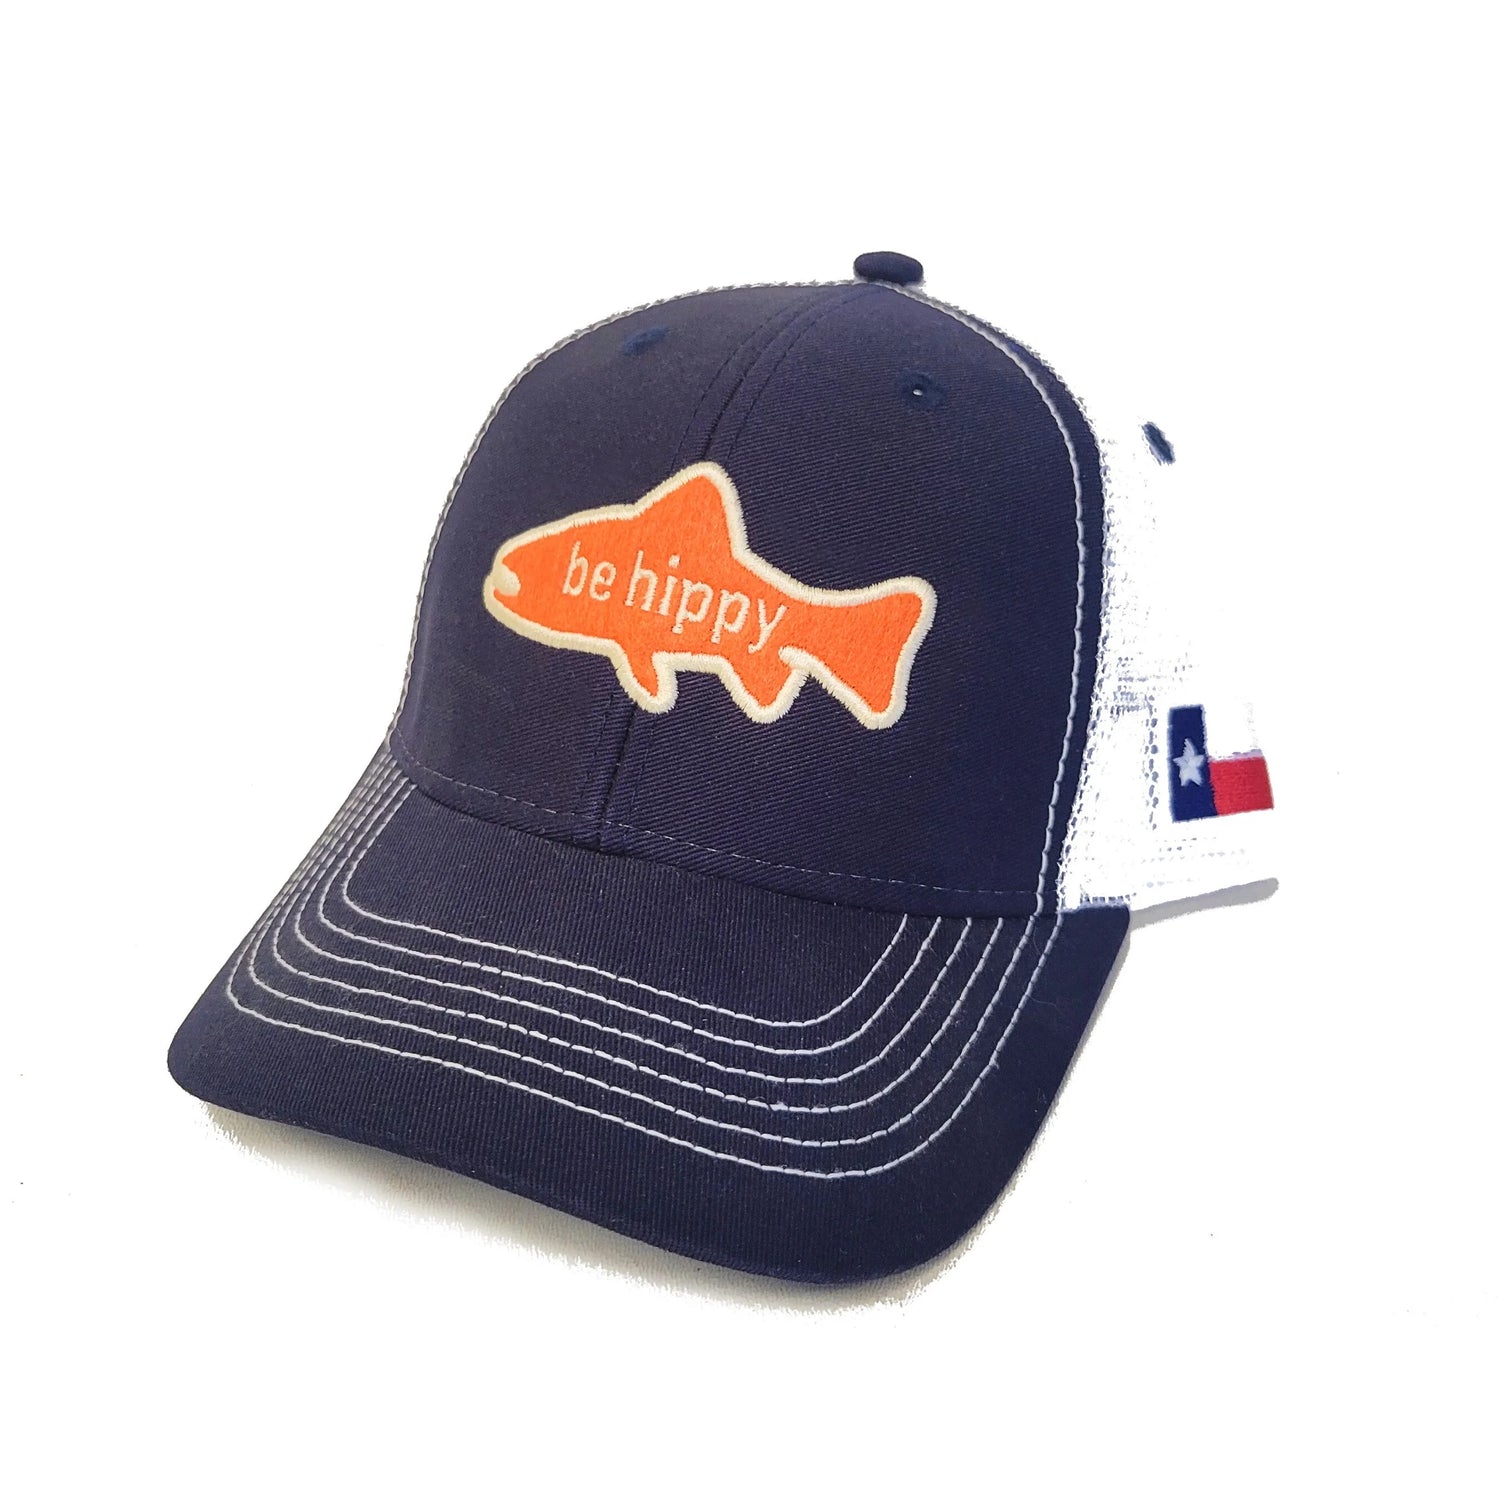 Thy Thou American Fish Flag Trucker Hats for Men Fishing Hat